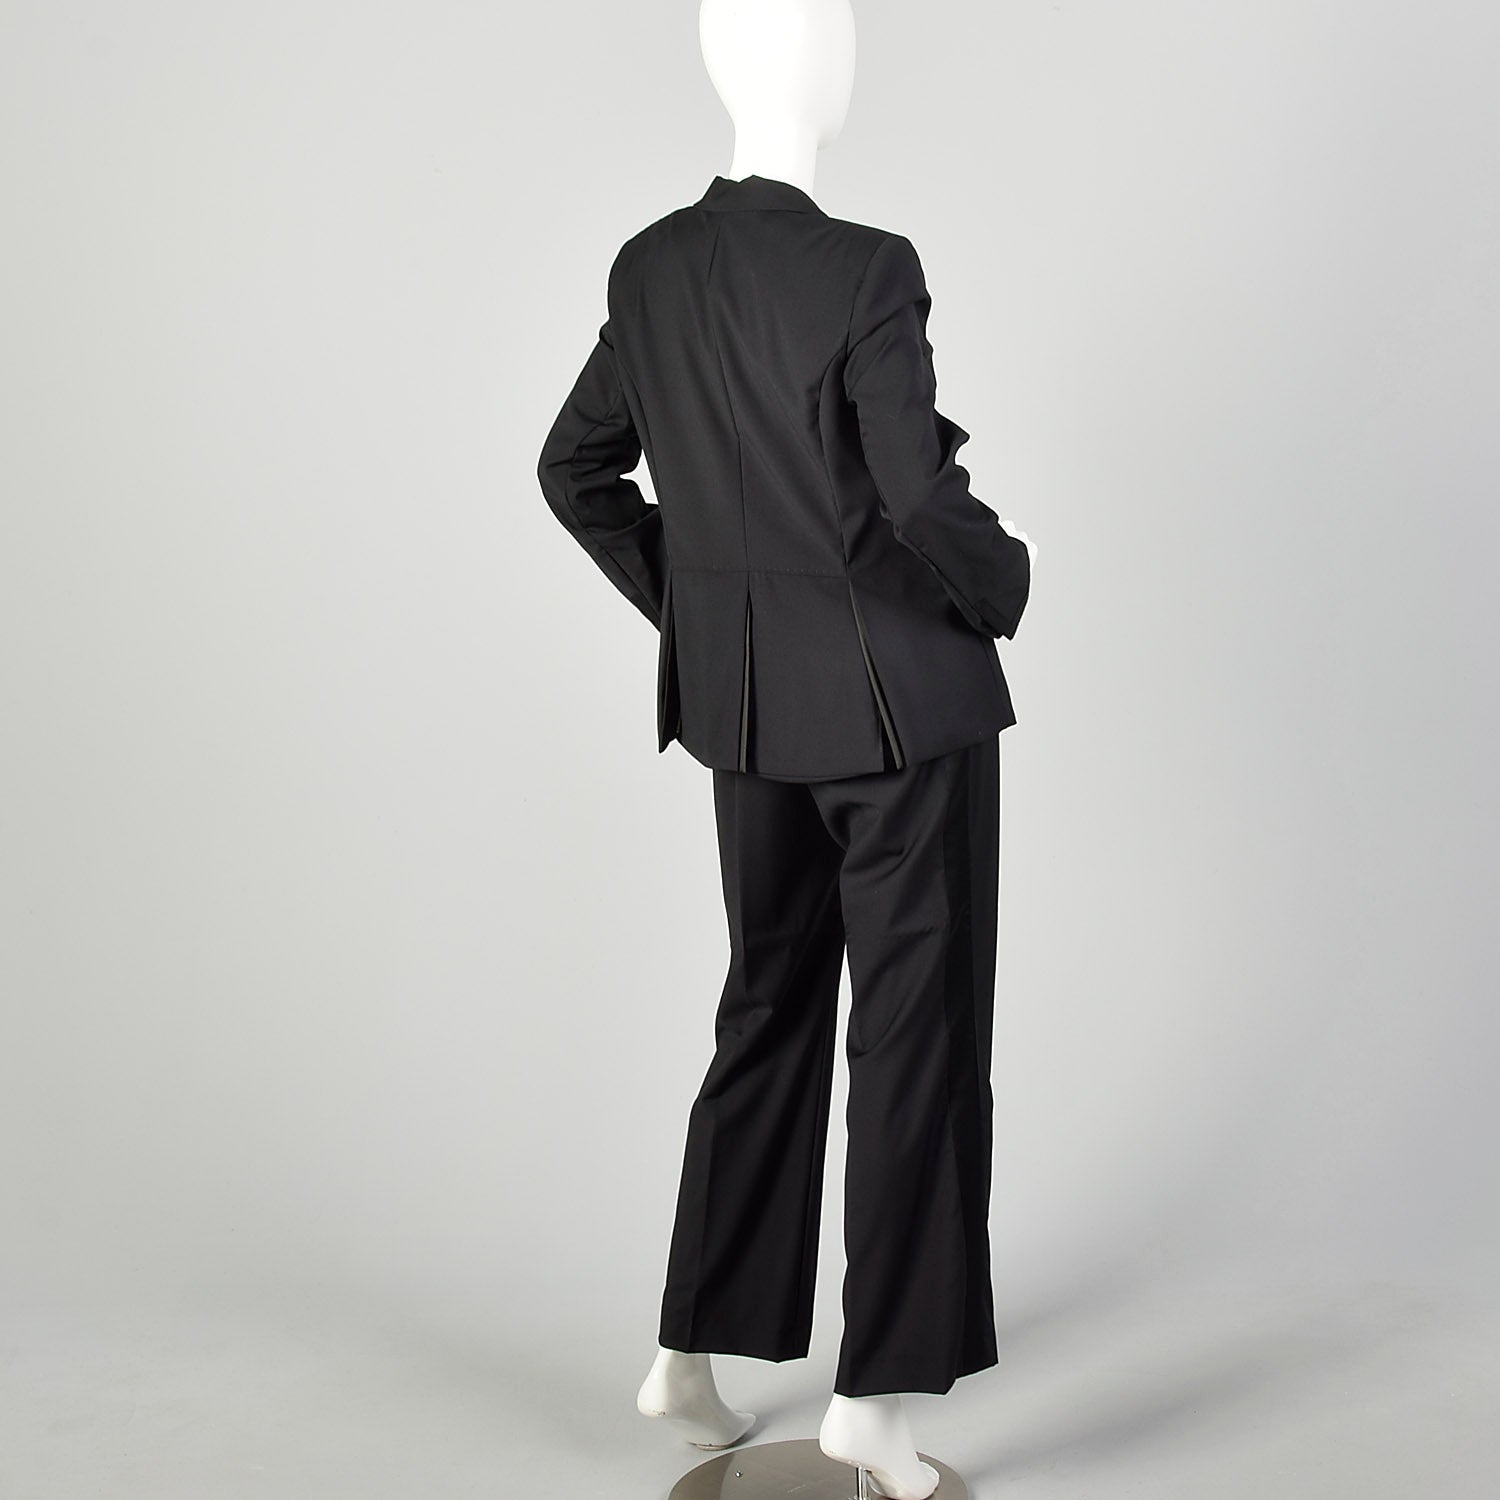 Amazon.com: A&J DESIGN Boys Suit Formal Gentleman Dress Easter Outfit Size  6 Khaki: Clothing, Shoes & Jewelry